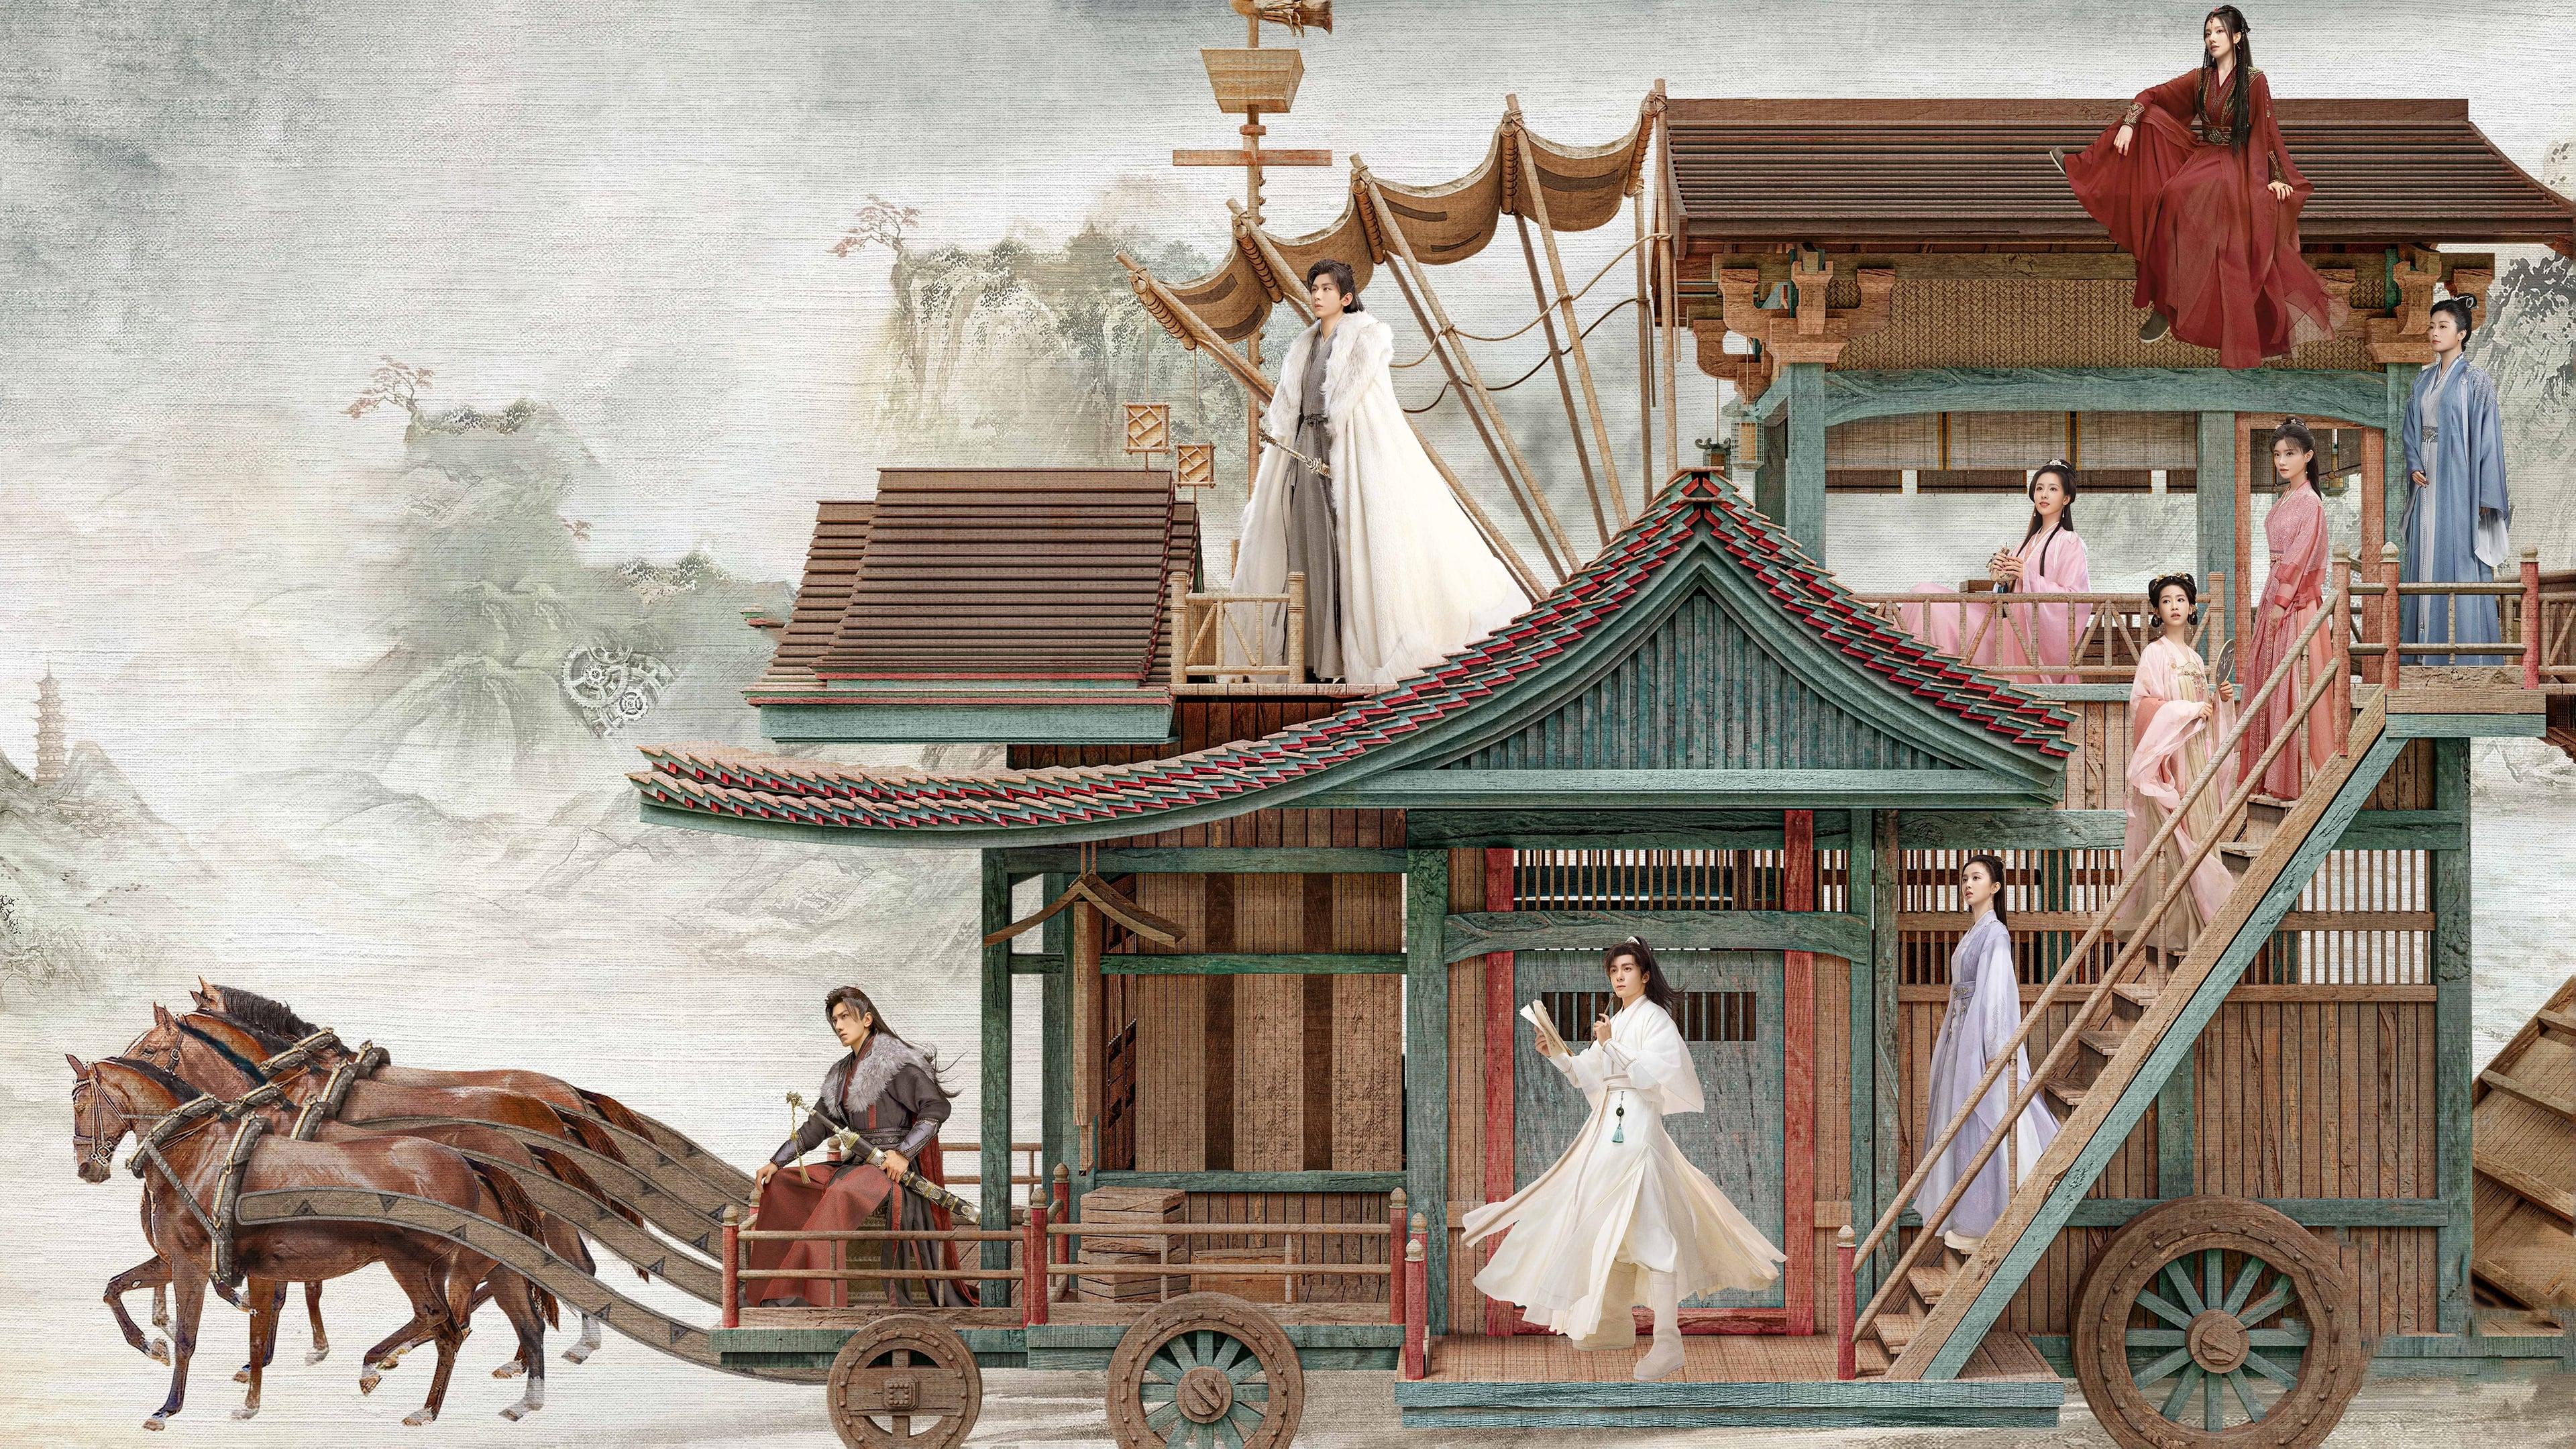 Zhang Lixin backdrop